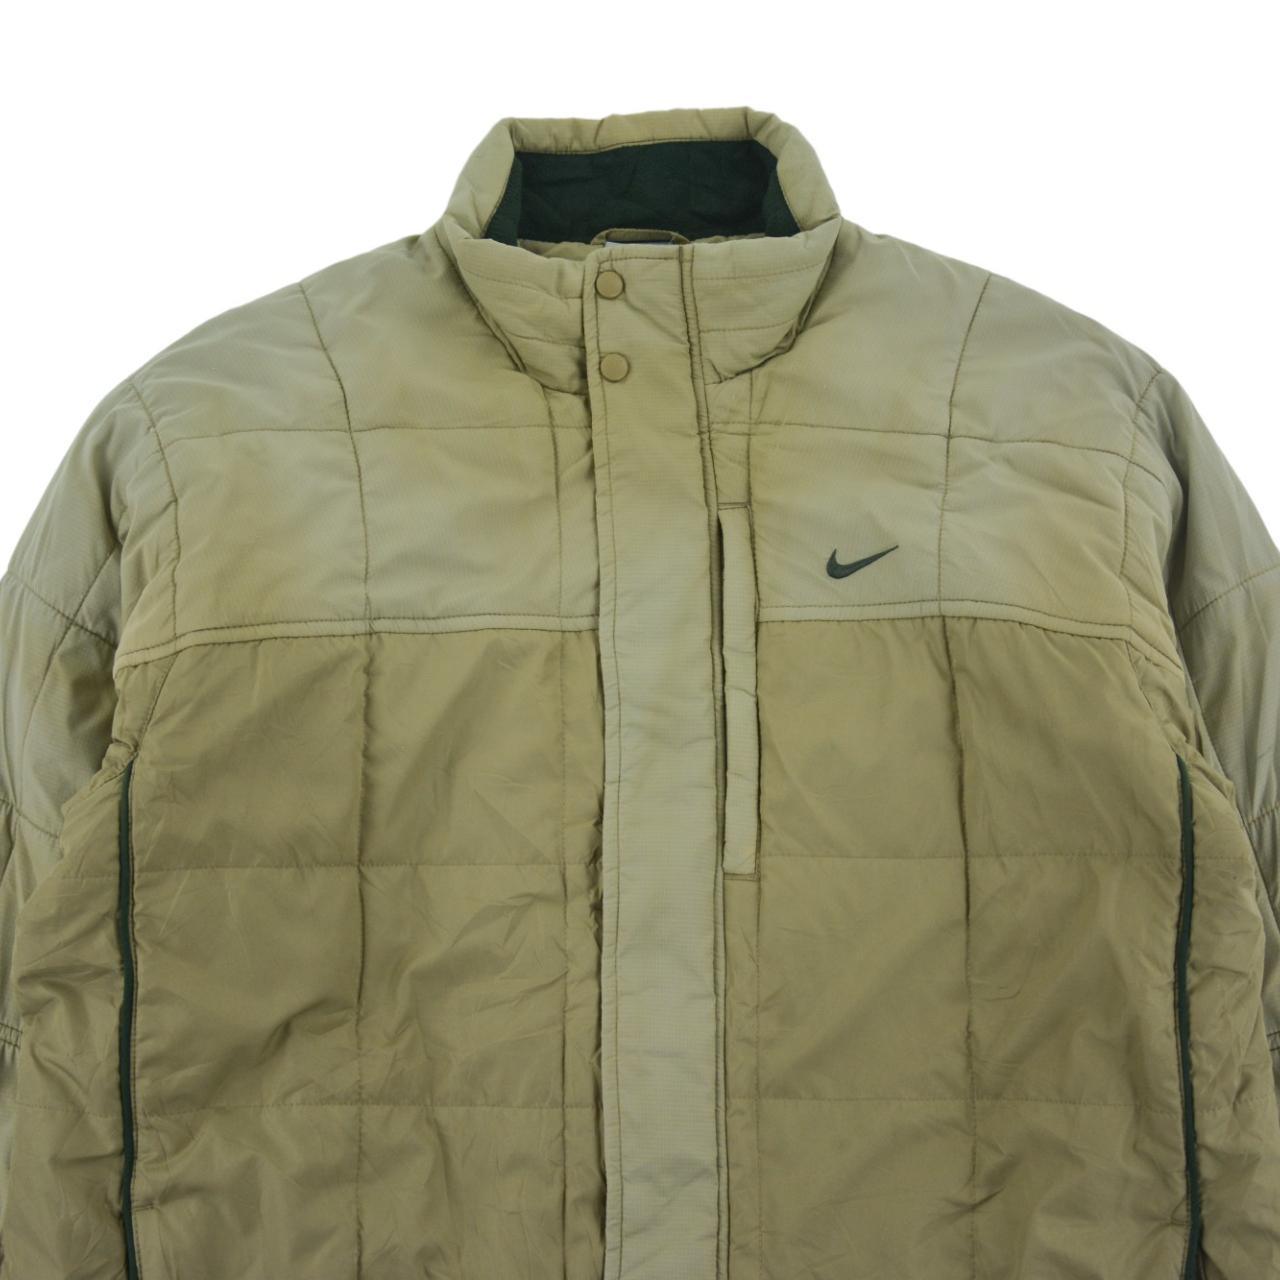 Vintage Nike Zip Up Puffa Jacket Size M - Known Source